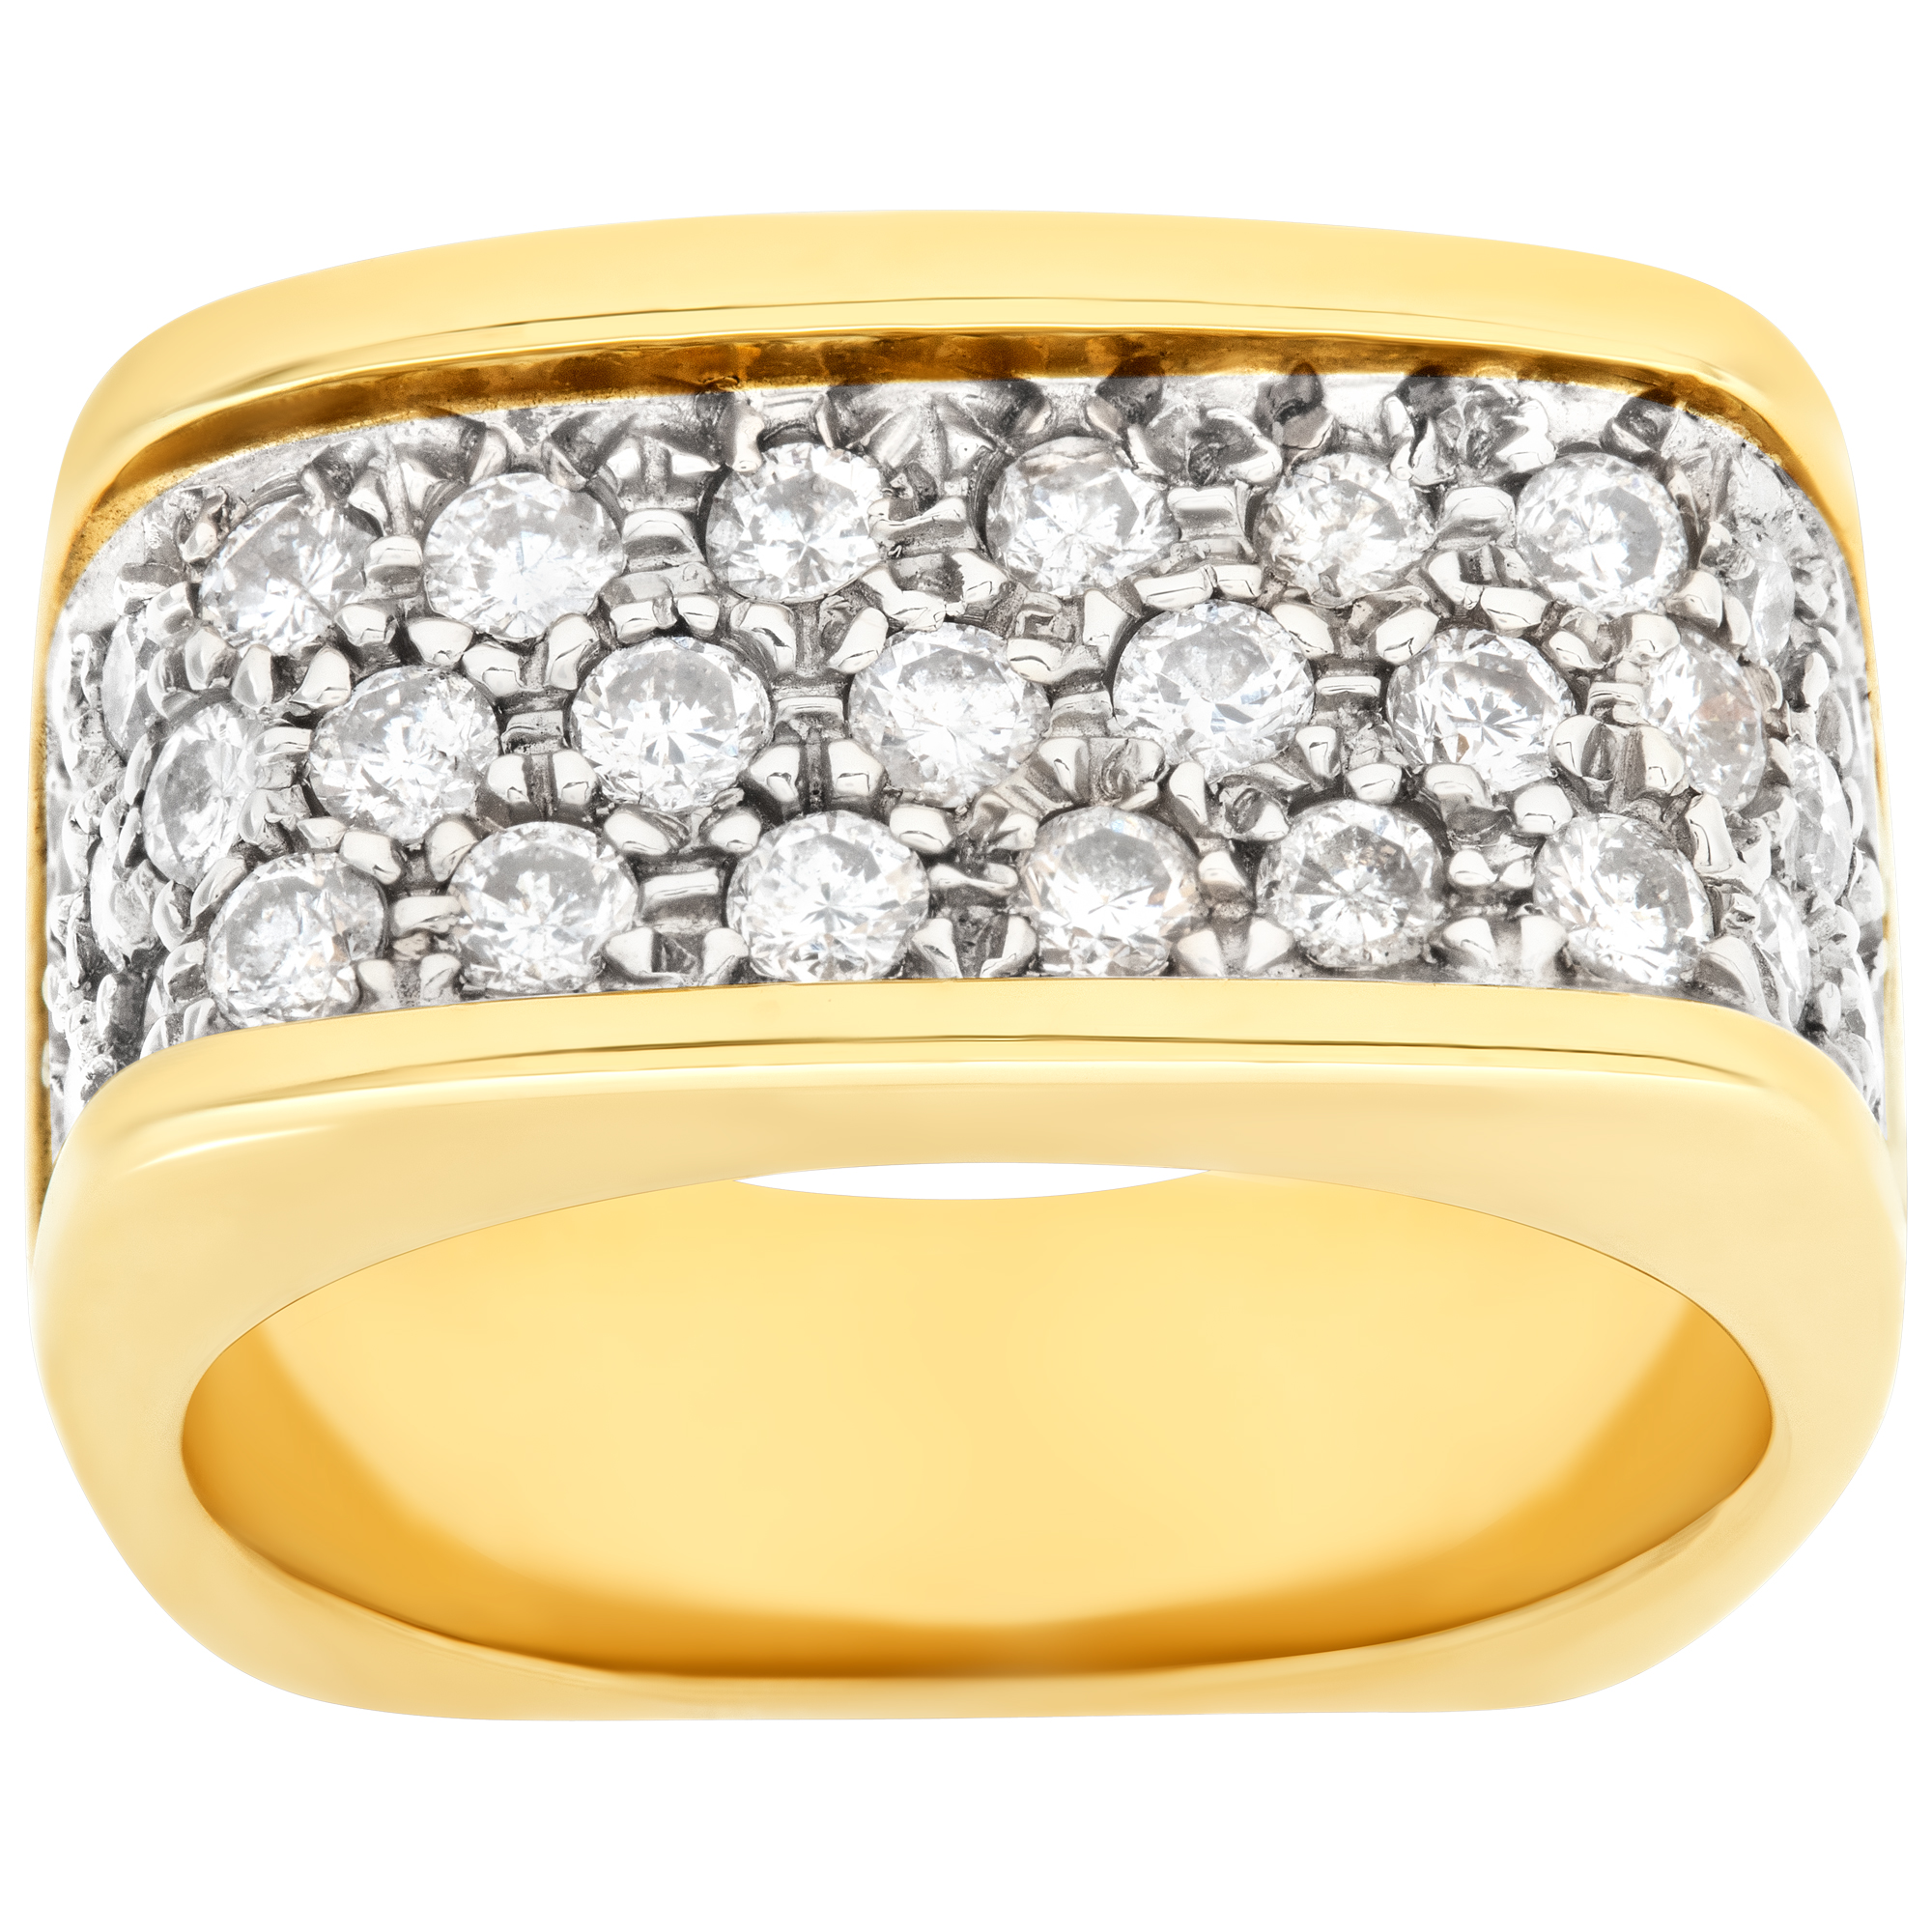 Beautiful 3 row pave diamonds ring with app. 1.50 carat in diamonds Size 6 image 1